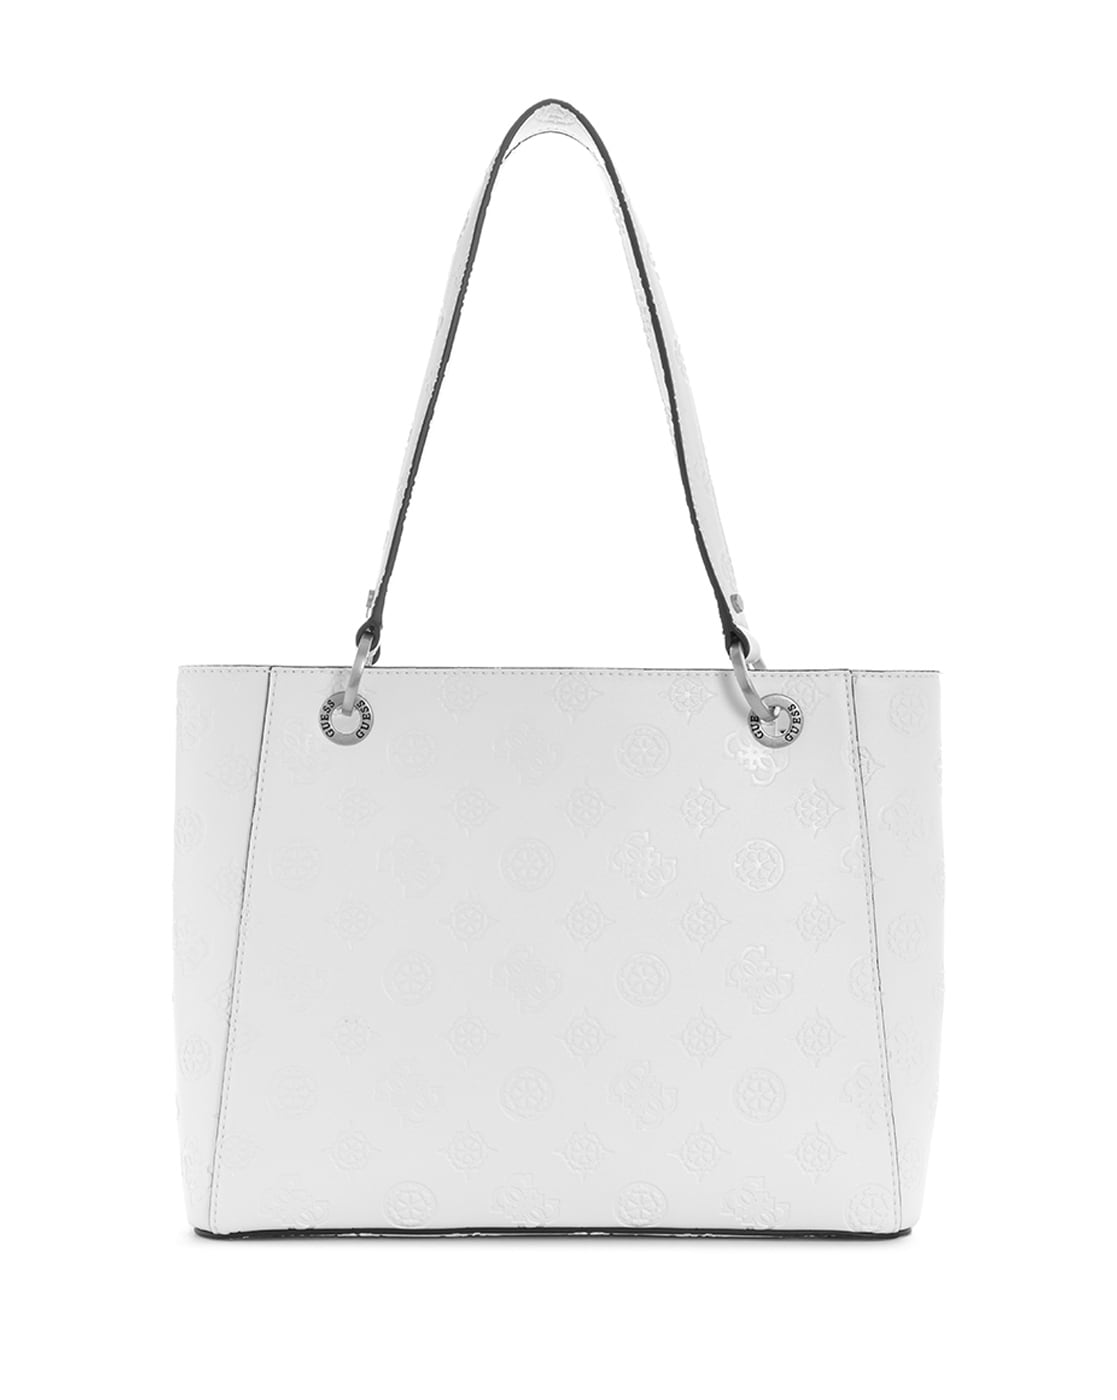 GUESS Handbags in Handbags - Walmart.com